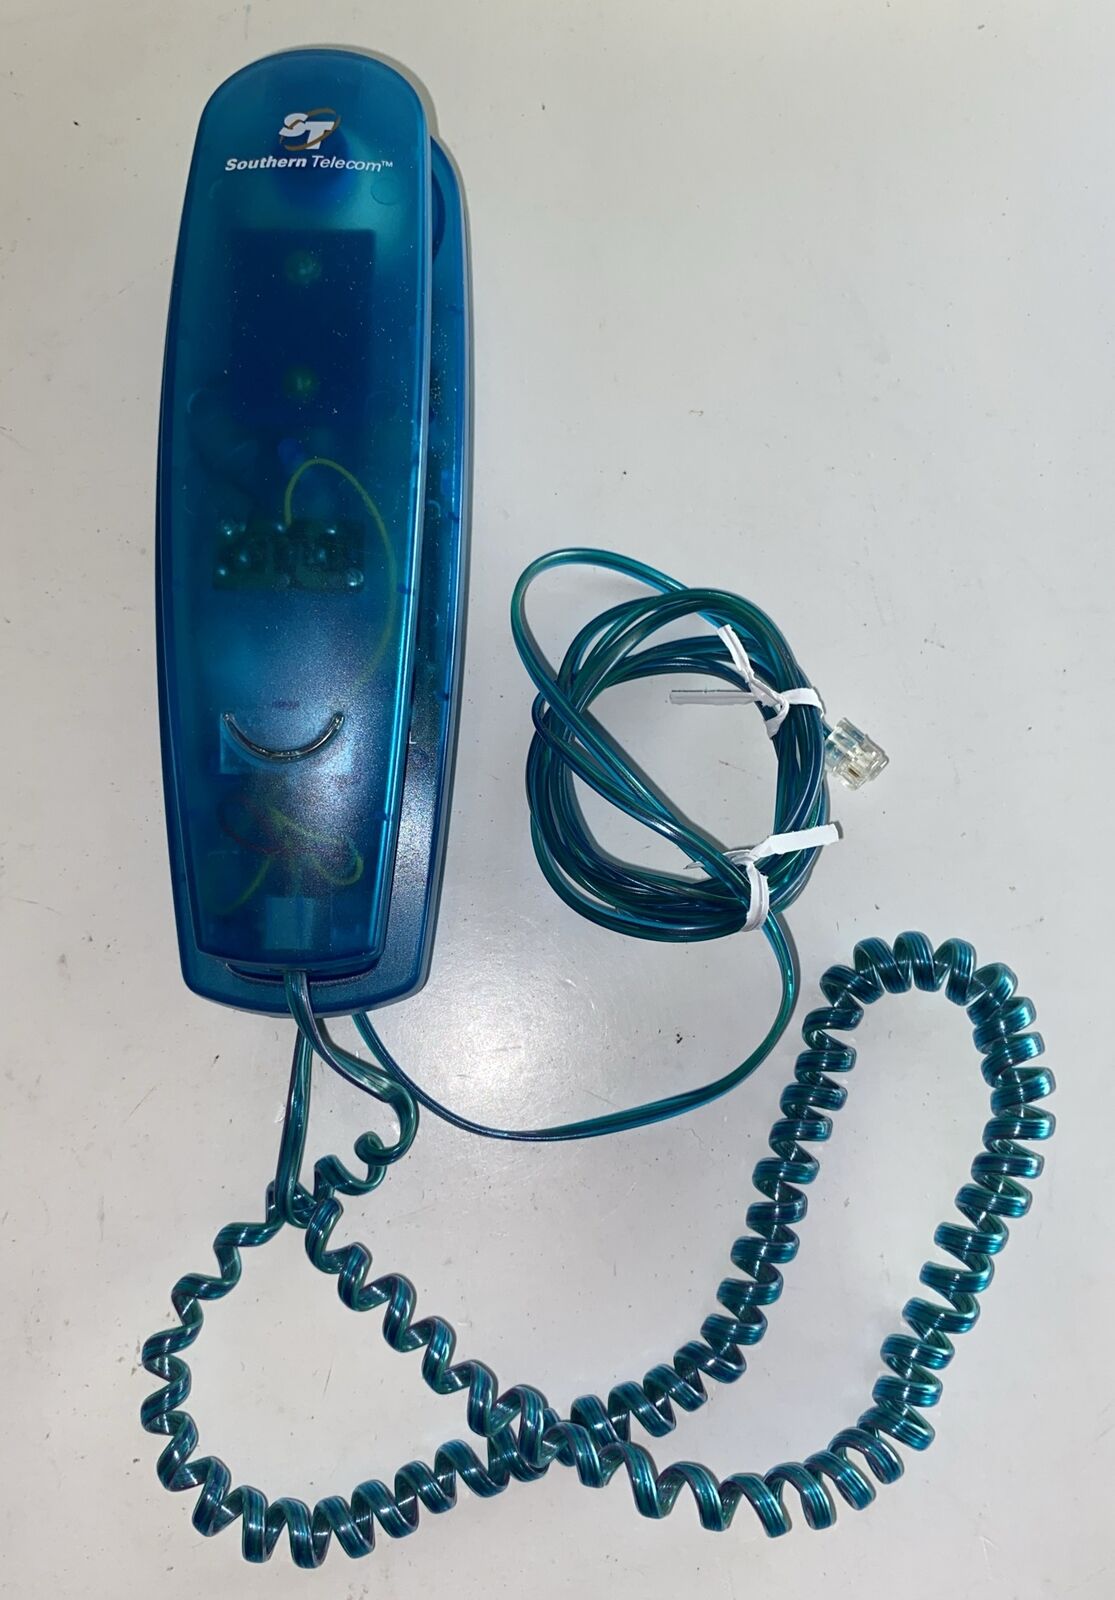 Vintage 1990’s Blue Clear See Through Southern Telecom Telephone Landline